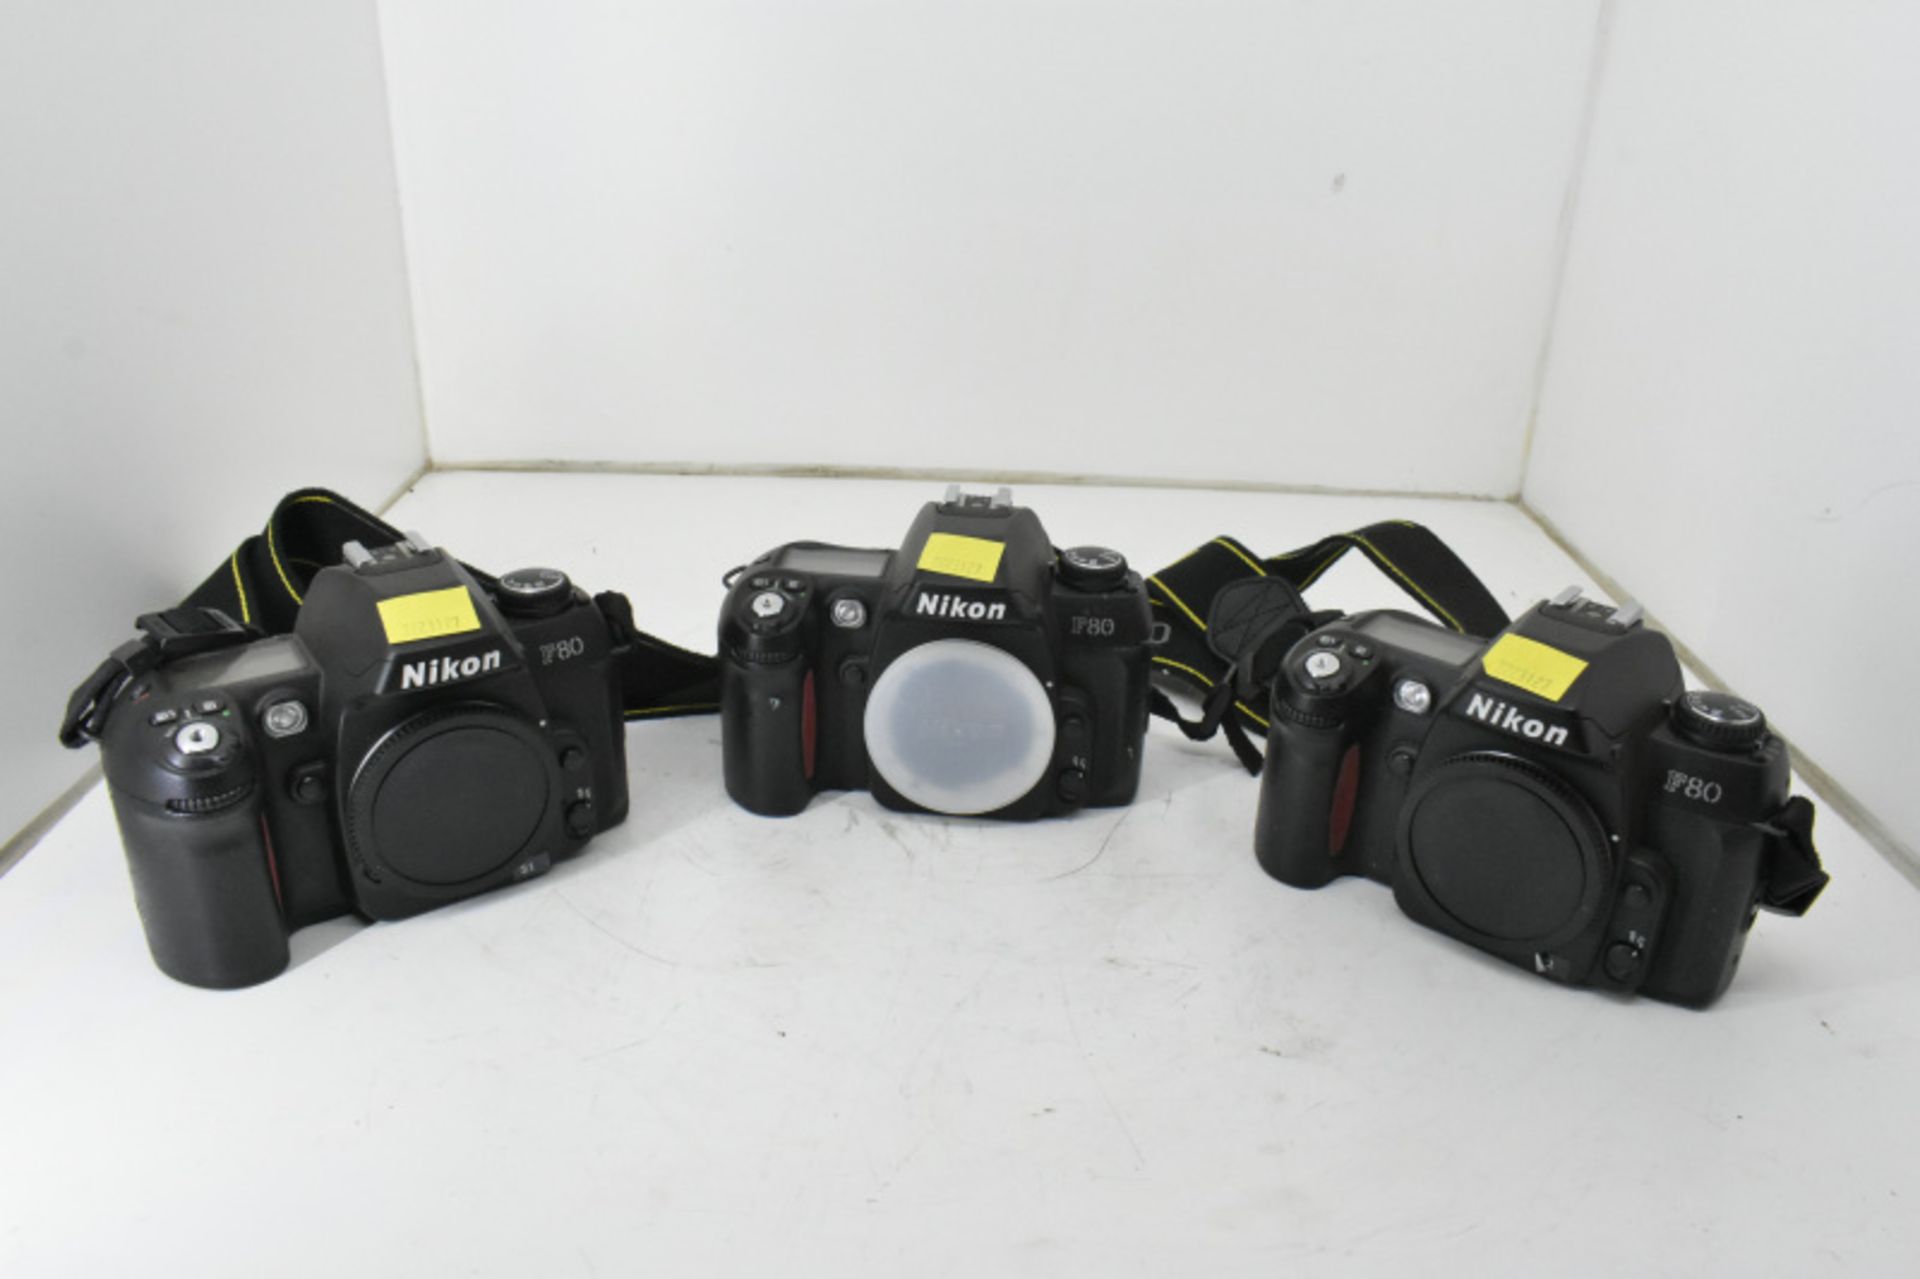 3x Nikon F80 Film Camera Bodies